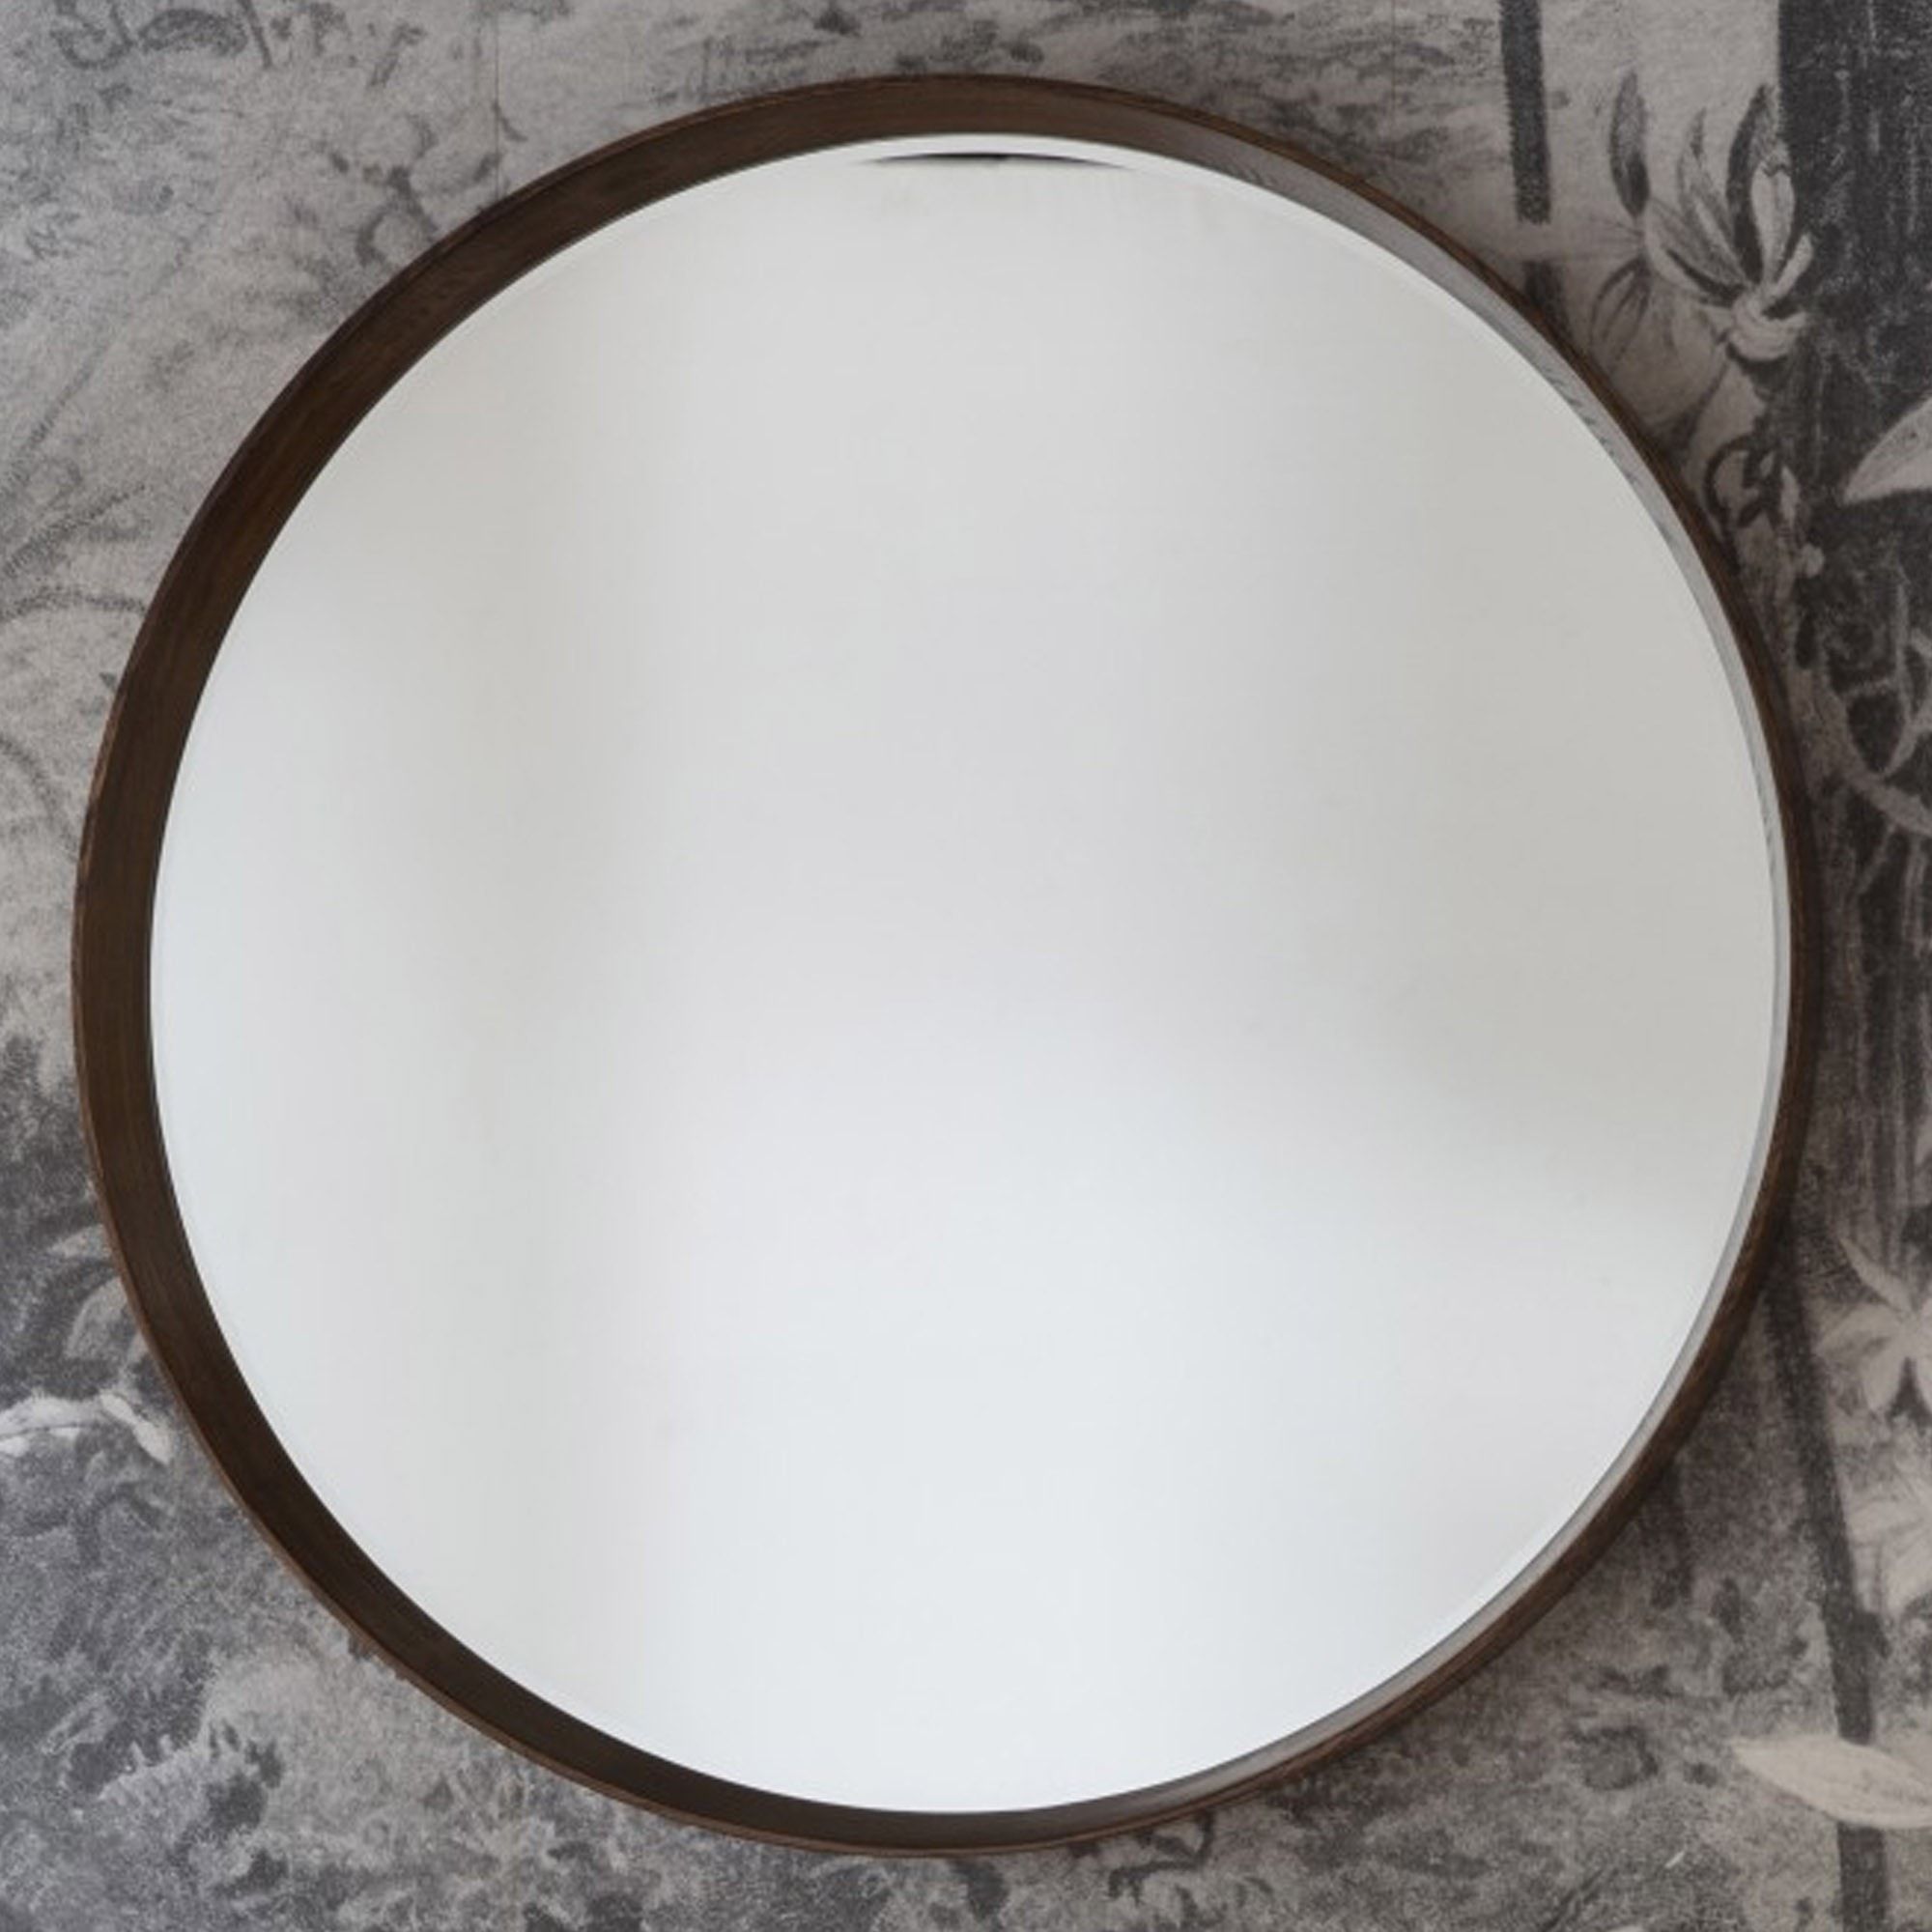 Keaton Round Mirror Walnut | Walnut Round Mirror | Round Mirror | Wall Regarding Free Floating Printed Glass Round Wall Mirrors (View 10 of 15)